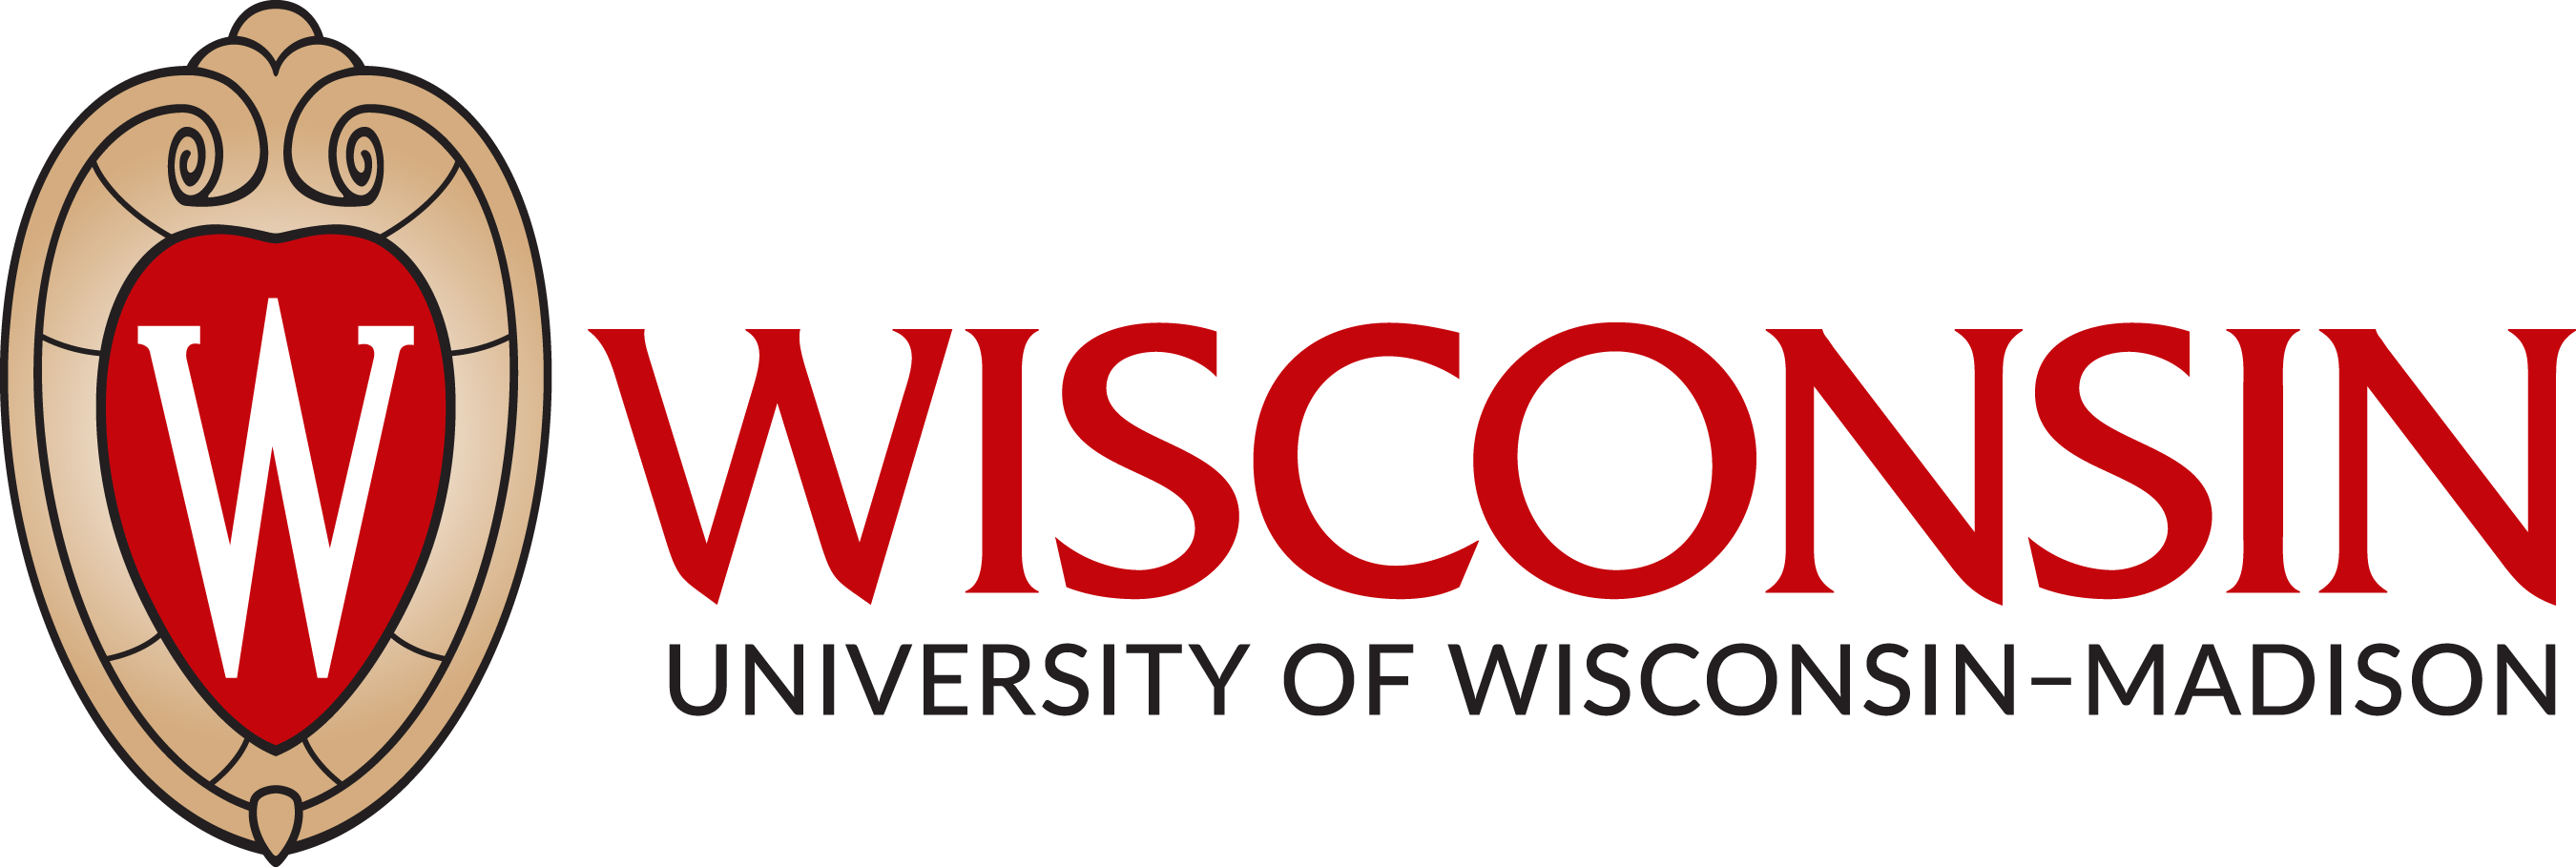 University of Wisconsin Law School